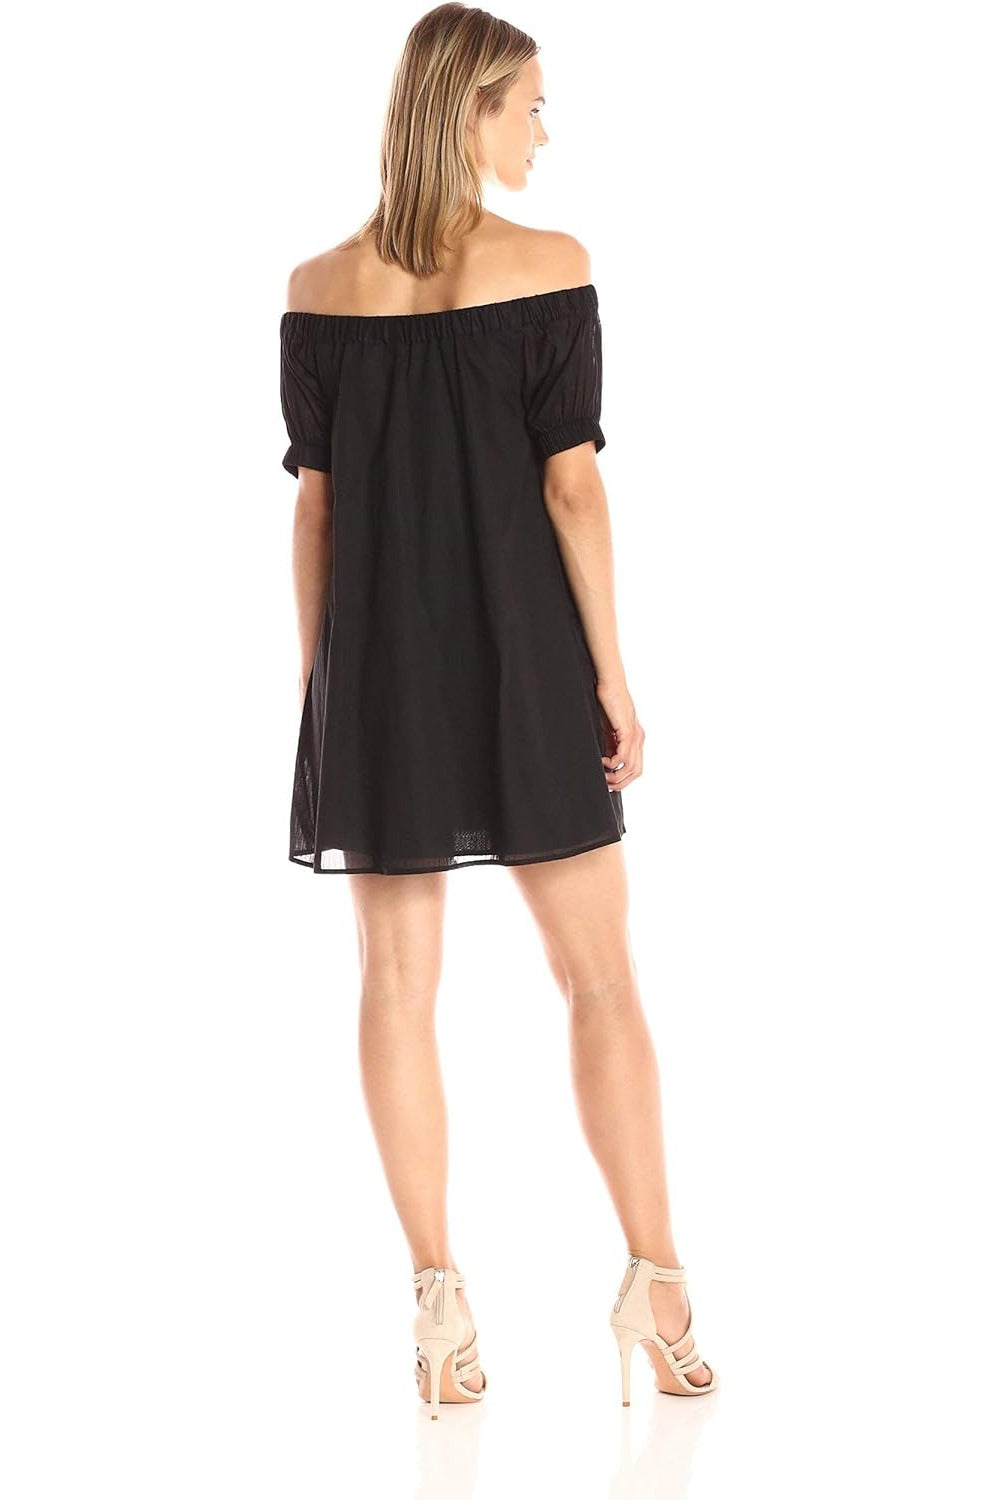 The Fifth Label Women's Sun Valley Off Shoulder Dress, Black